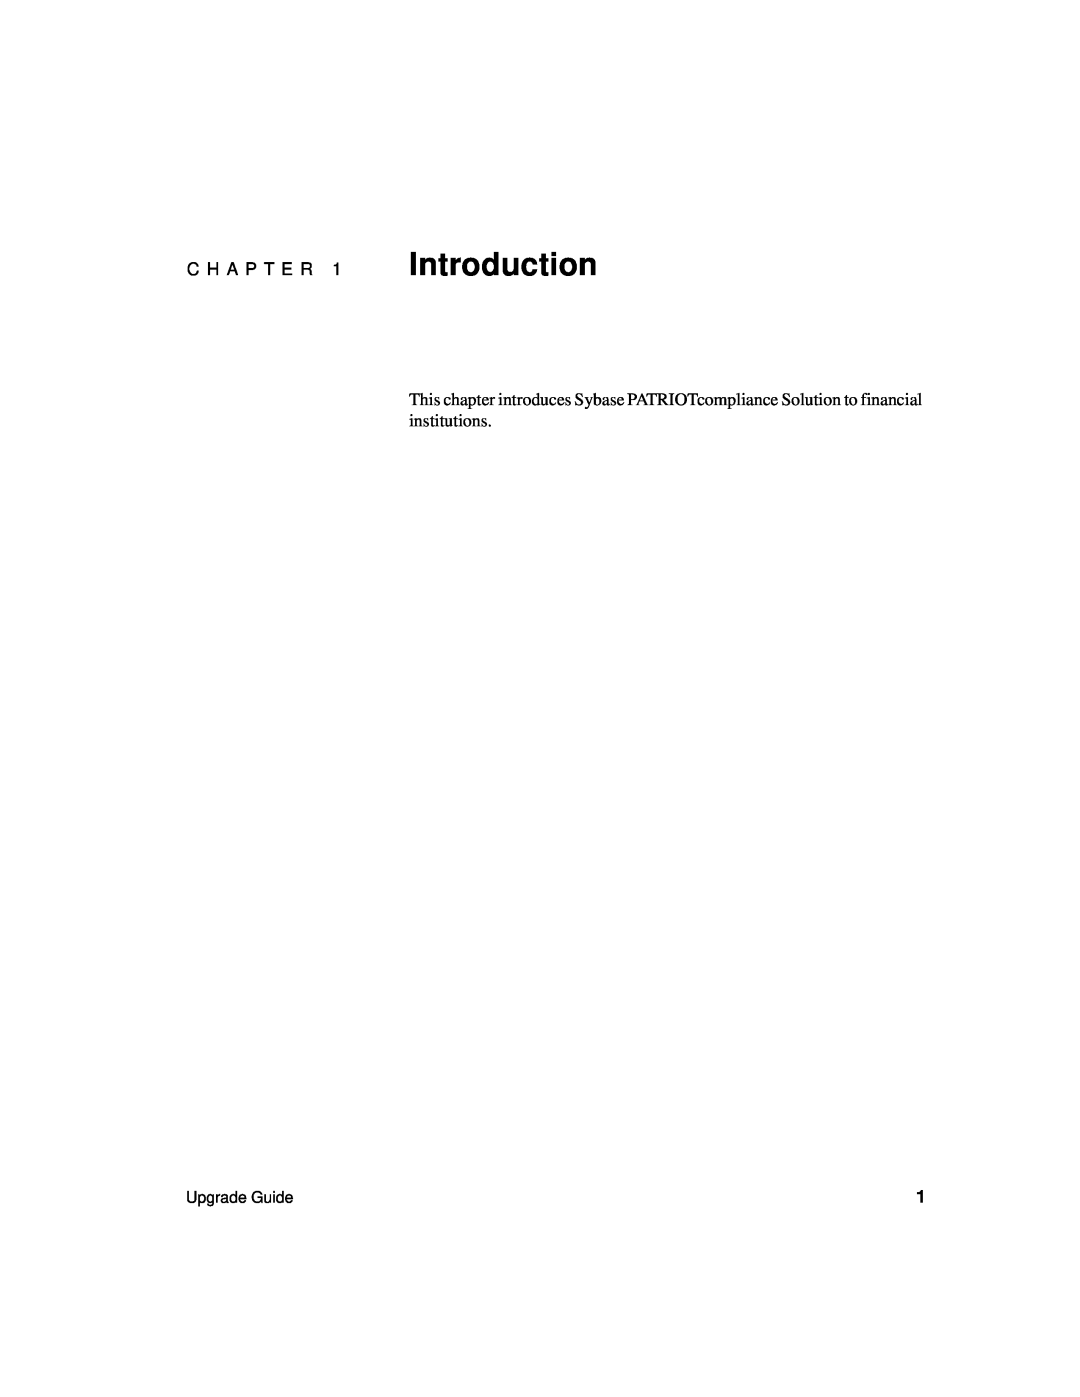 Sybase Version 2.2 manual Introduction, C H A P T E R 